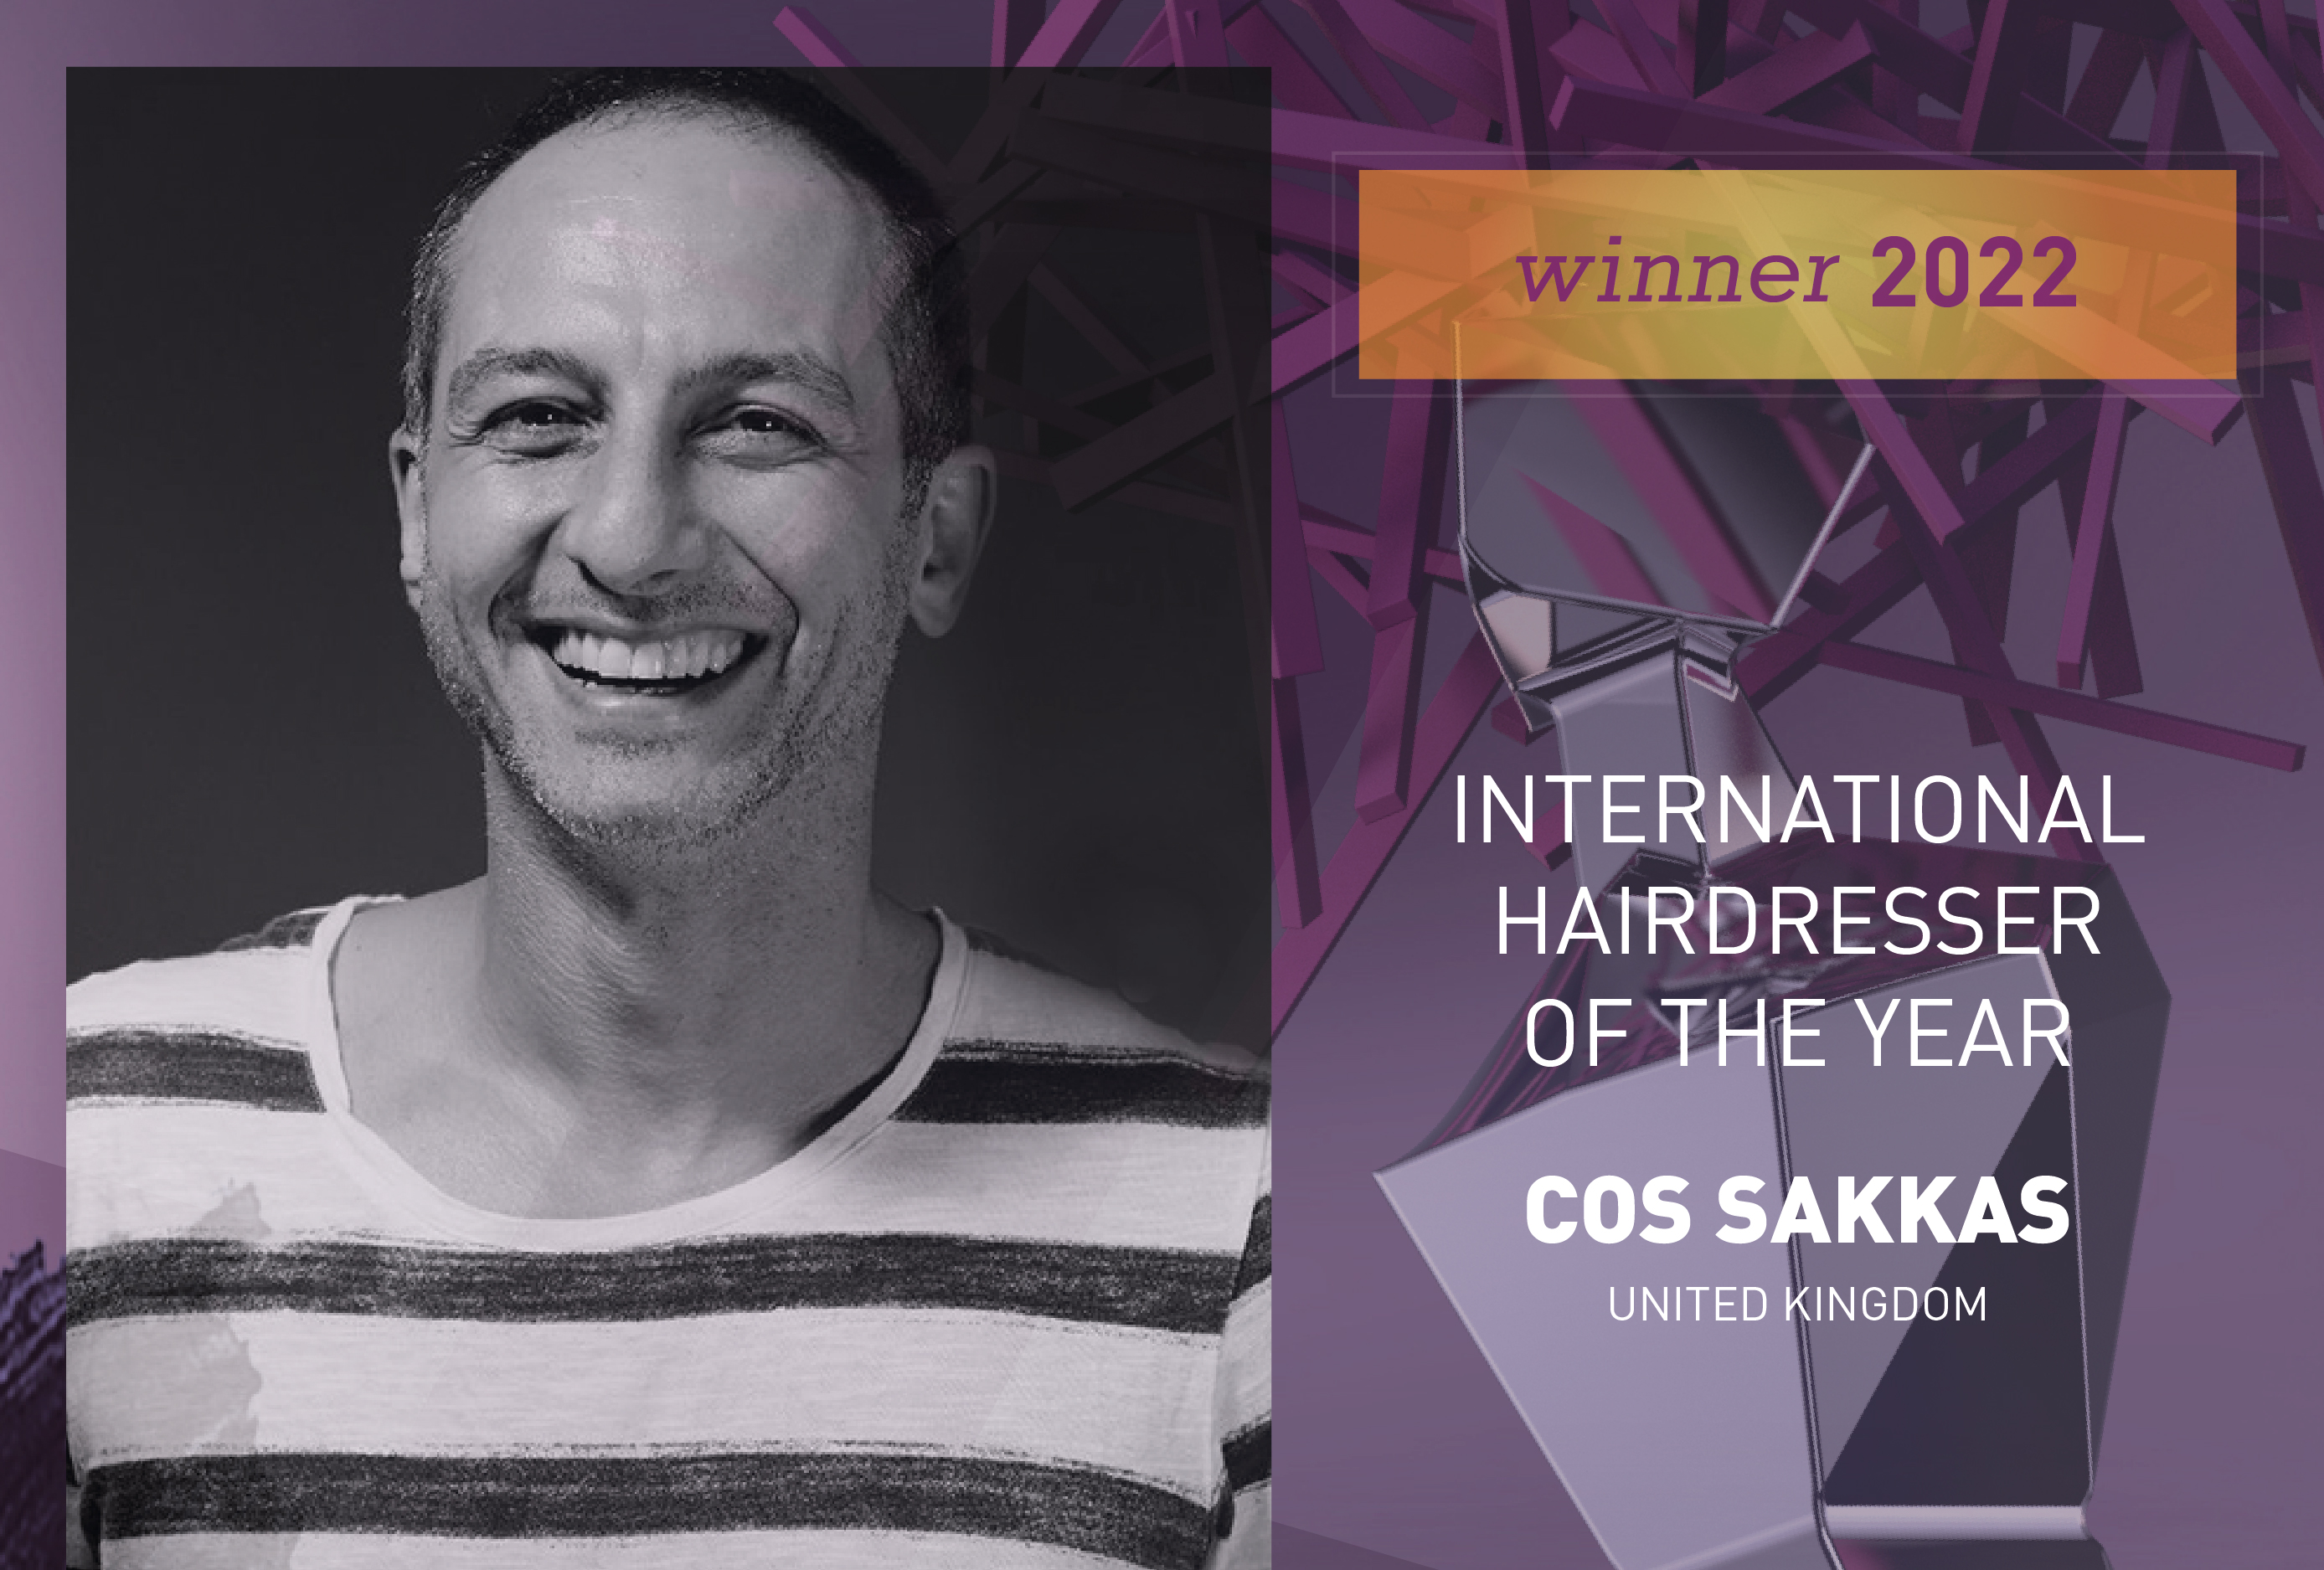 Cos Sakkas, brand new International Hairdresser of the Year at the 2022 International Hairdressing Awards